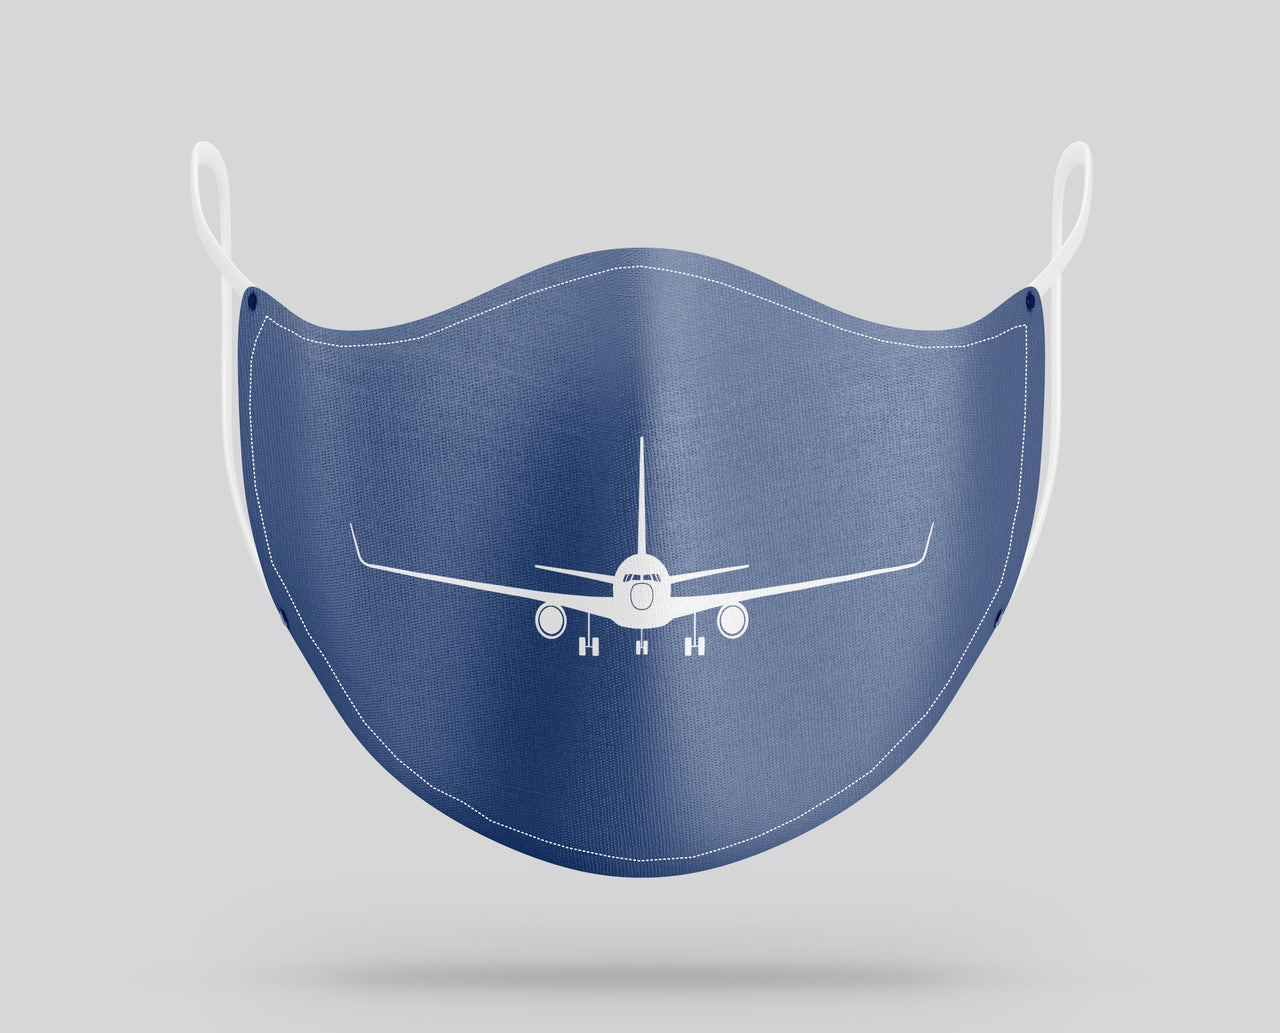 Boeing 767 Silhouette Designed Face Masks